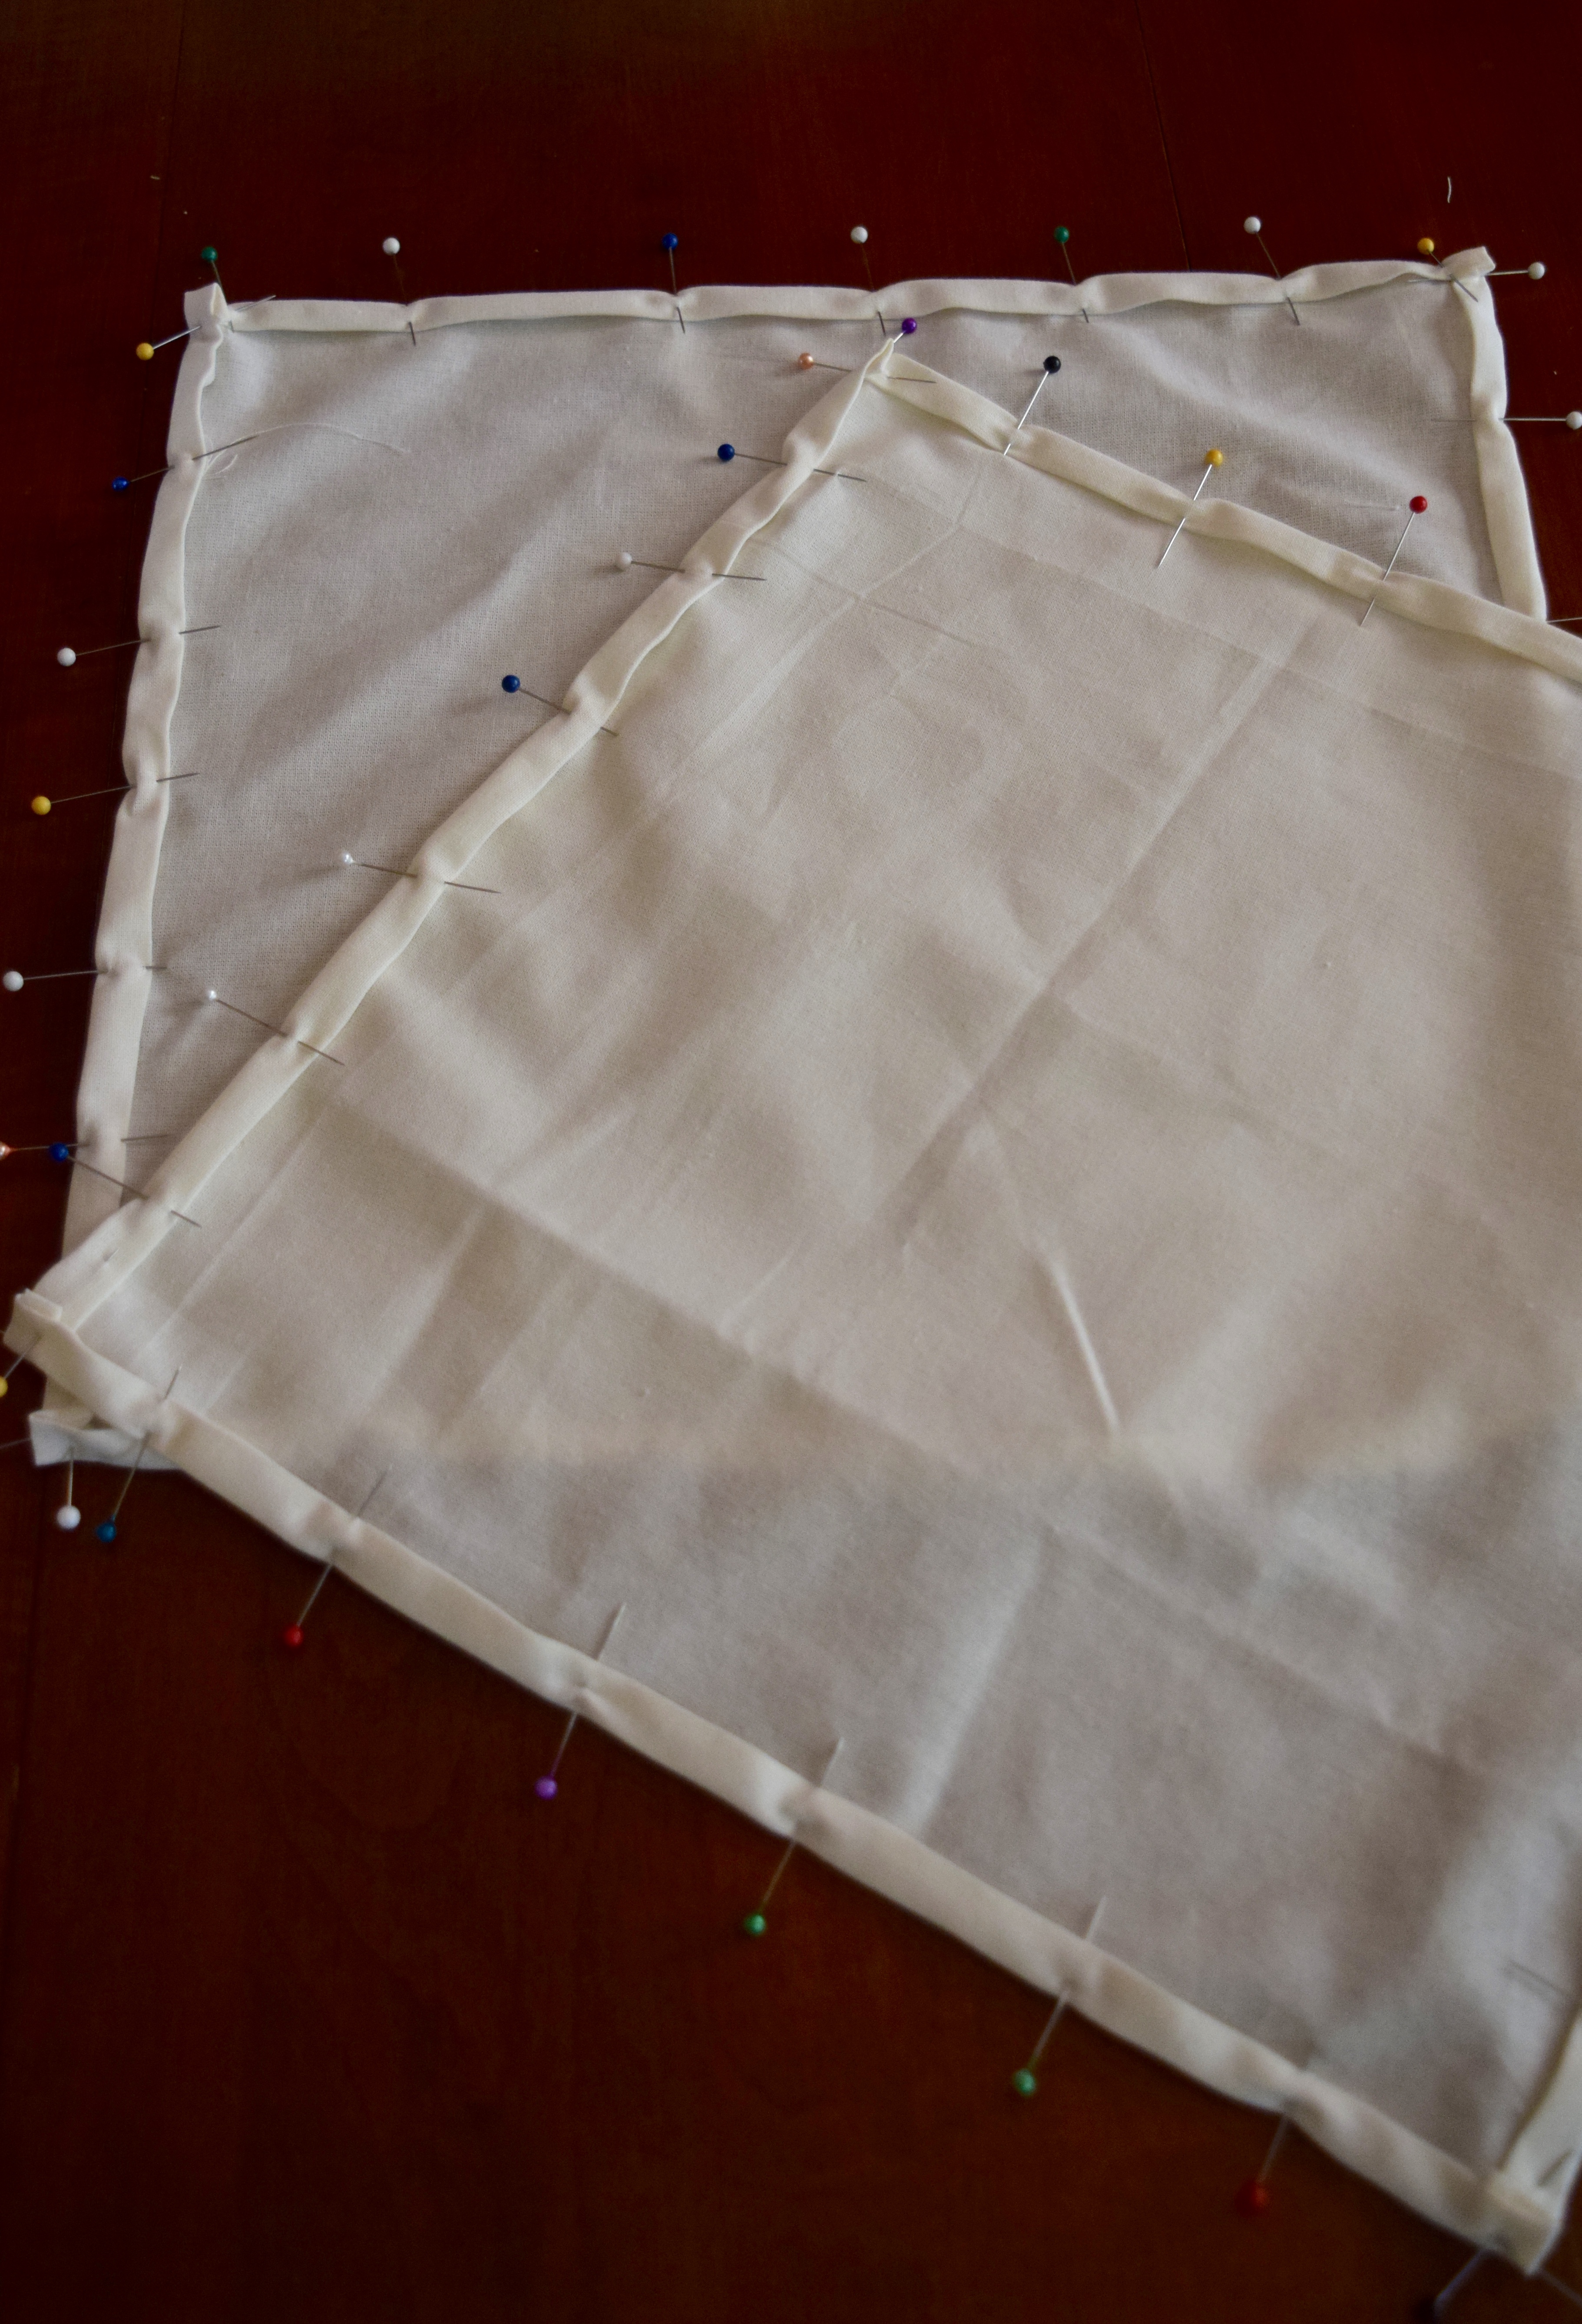 How to sew and block-print napkins | flourishandknot.com